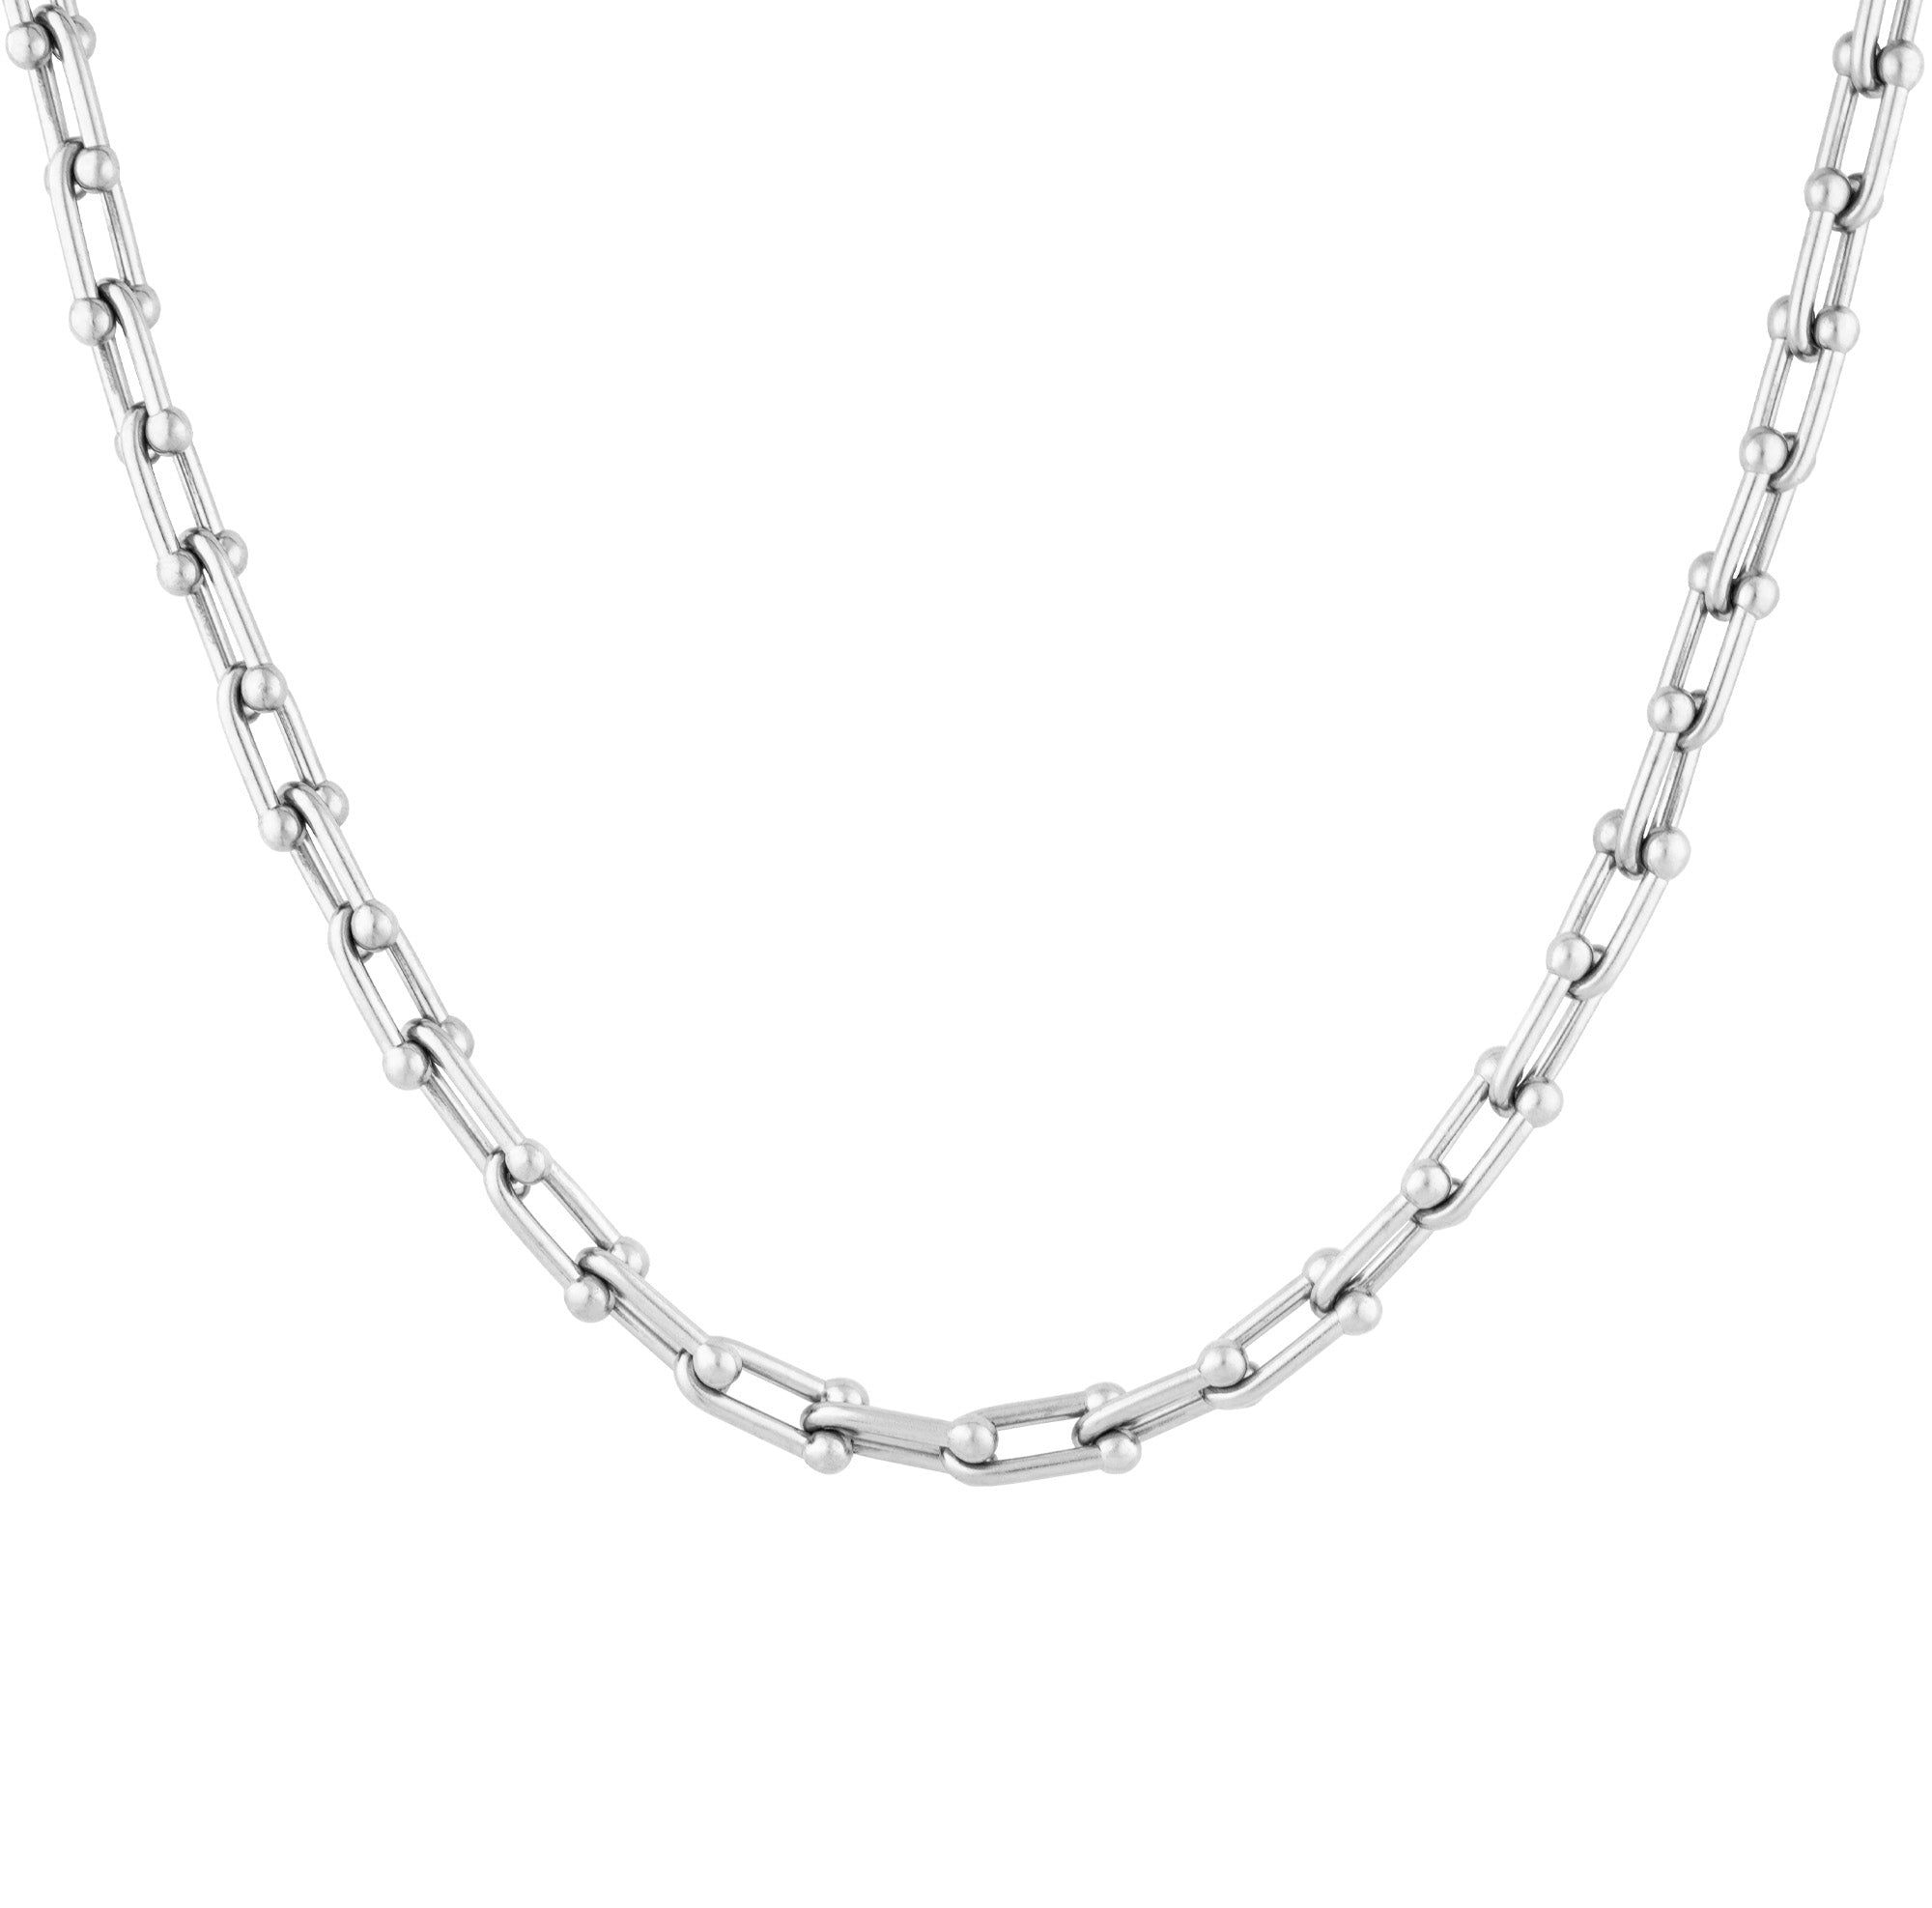 FJ Watches sepik necklace silver men women stainless steel adjustable Horseshoe Clavicle Chain 5mm 50cm 45cm